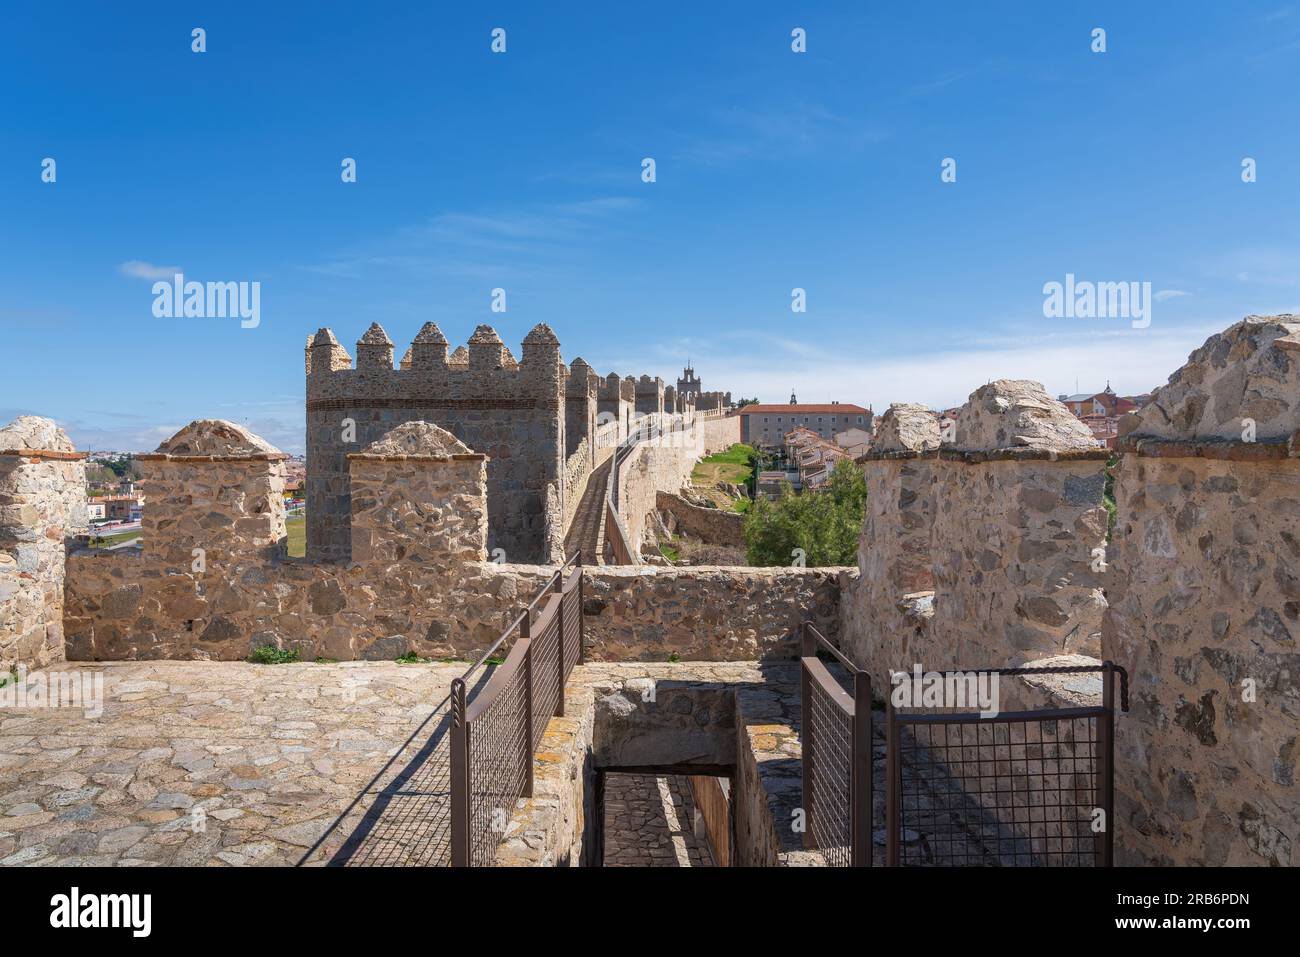 Mittelalterliche Mauern der Avila-Zinnen und Türme - Avila, Spanien Stockfoto